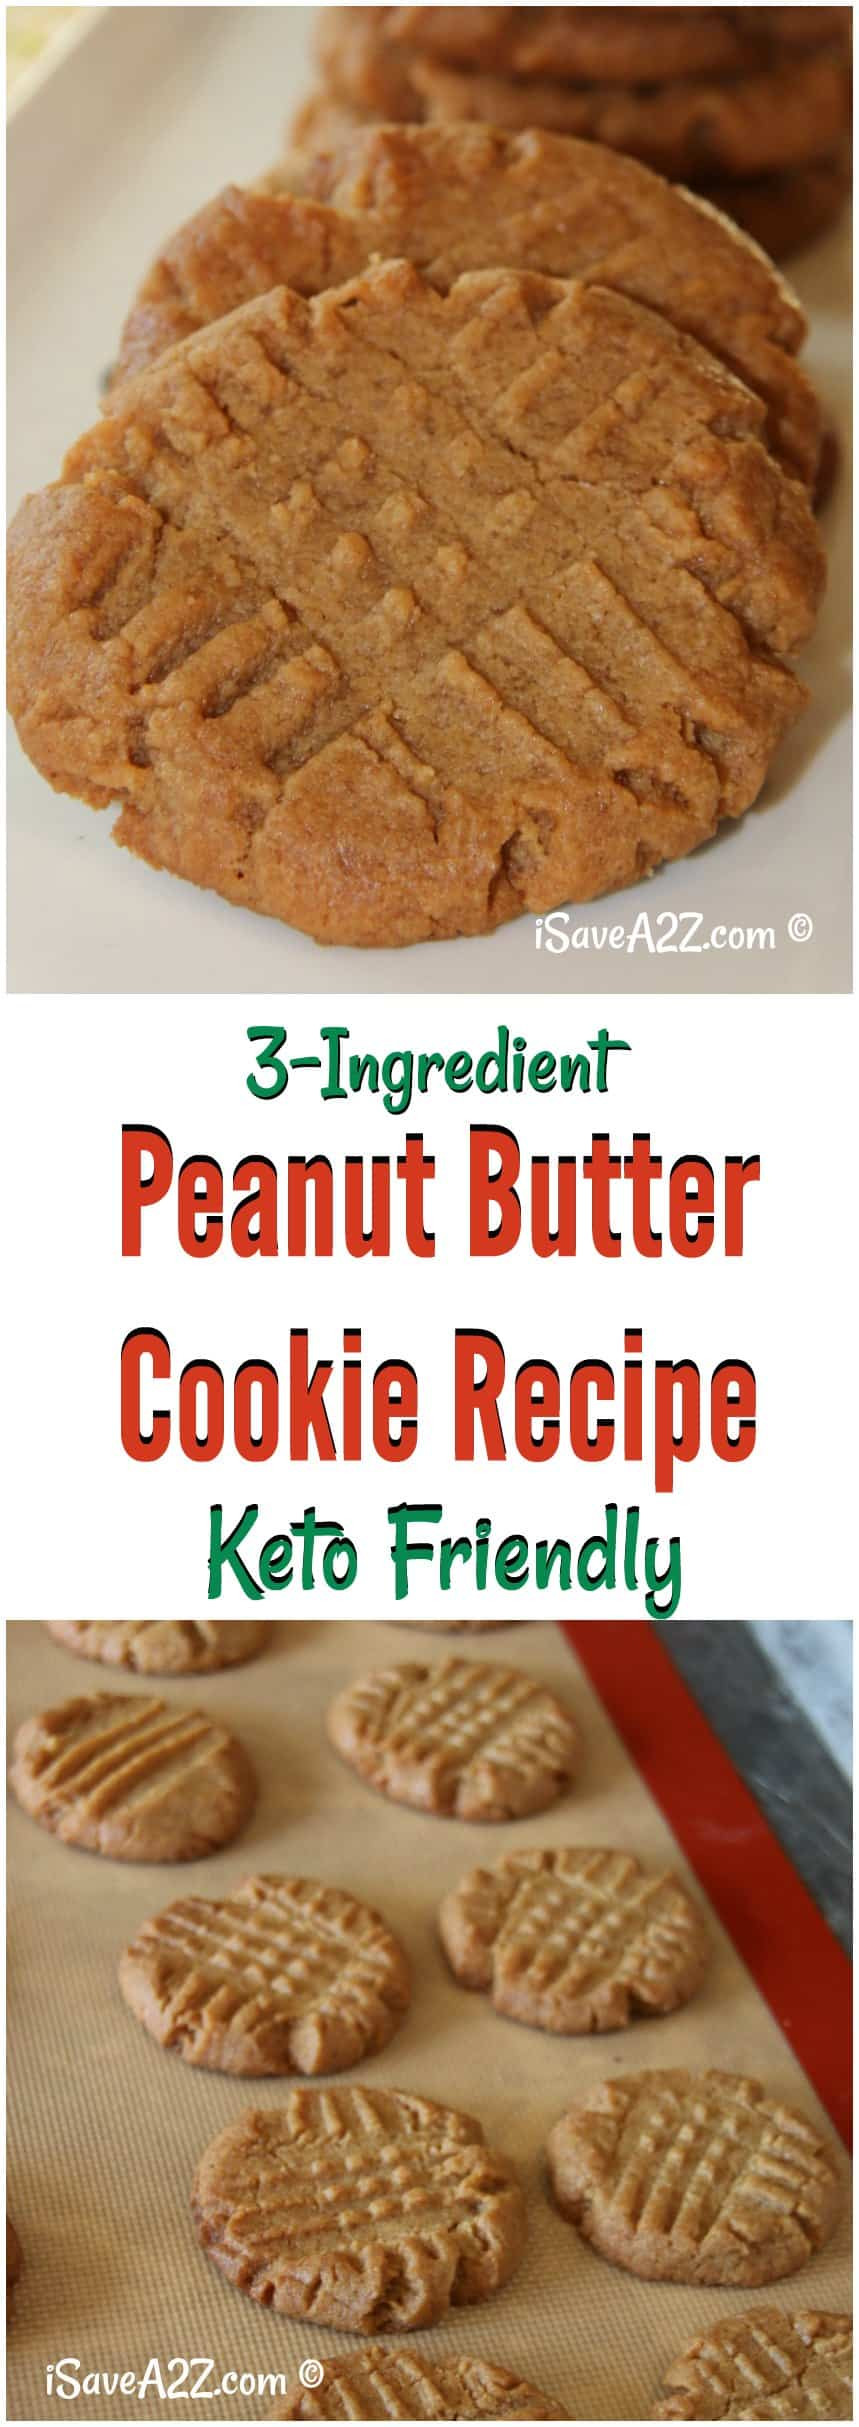 Keto Dessert Peanut Butter
 3 Ingre nt Keto Peanut Butter Cookies Recipe iSaveA2Z